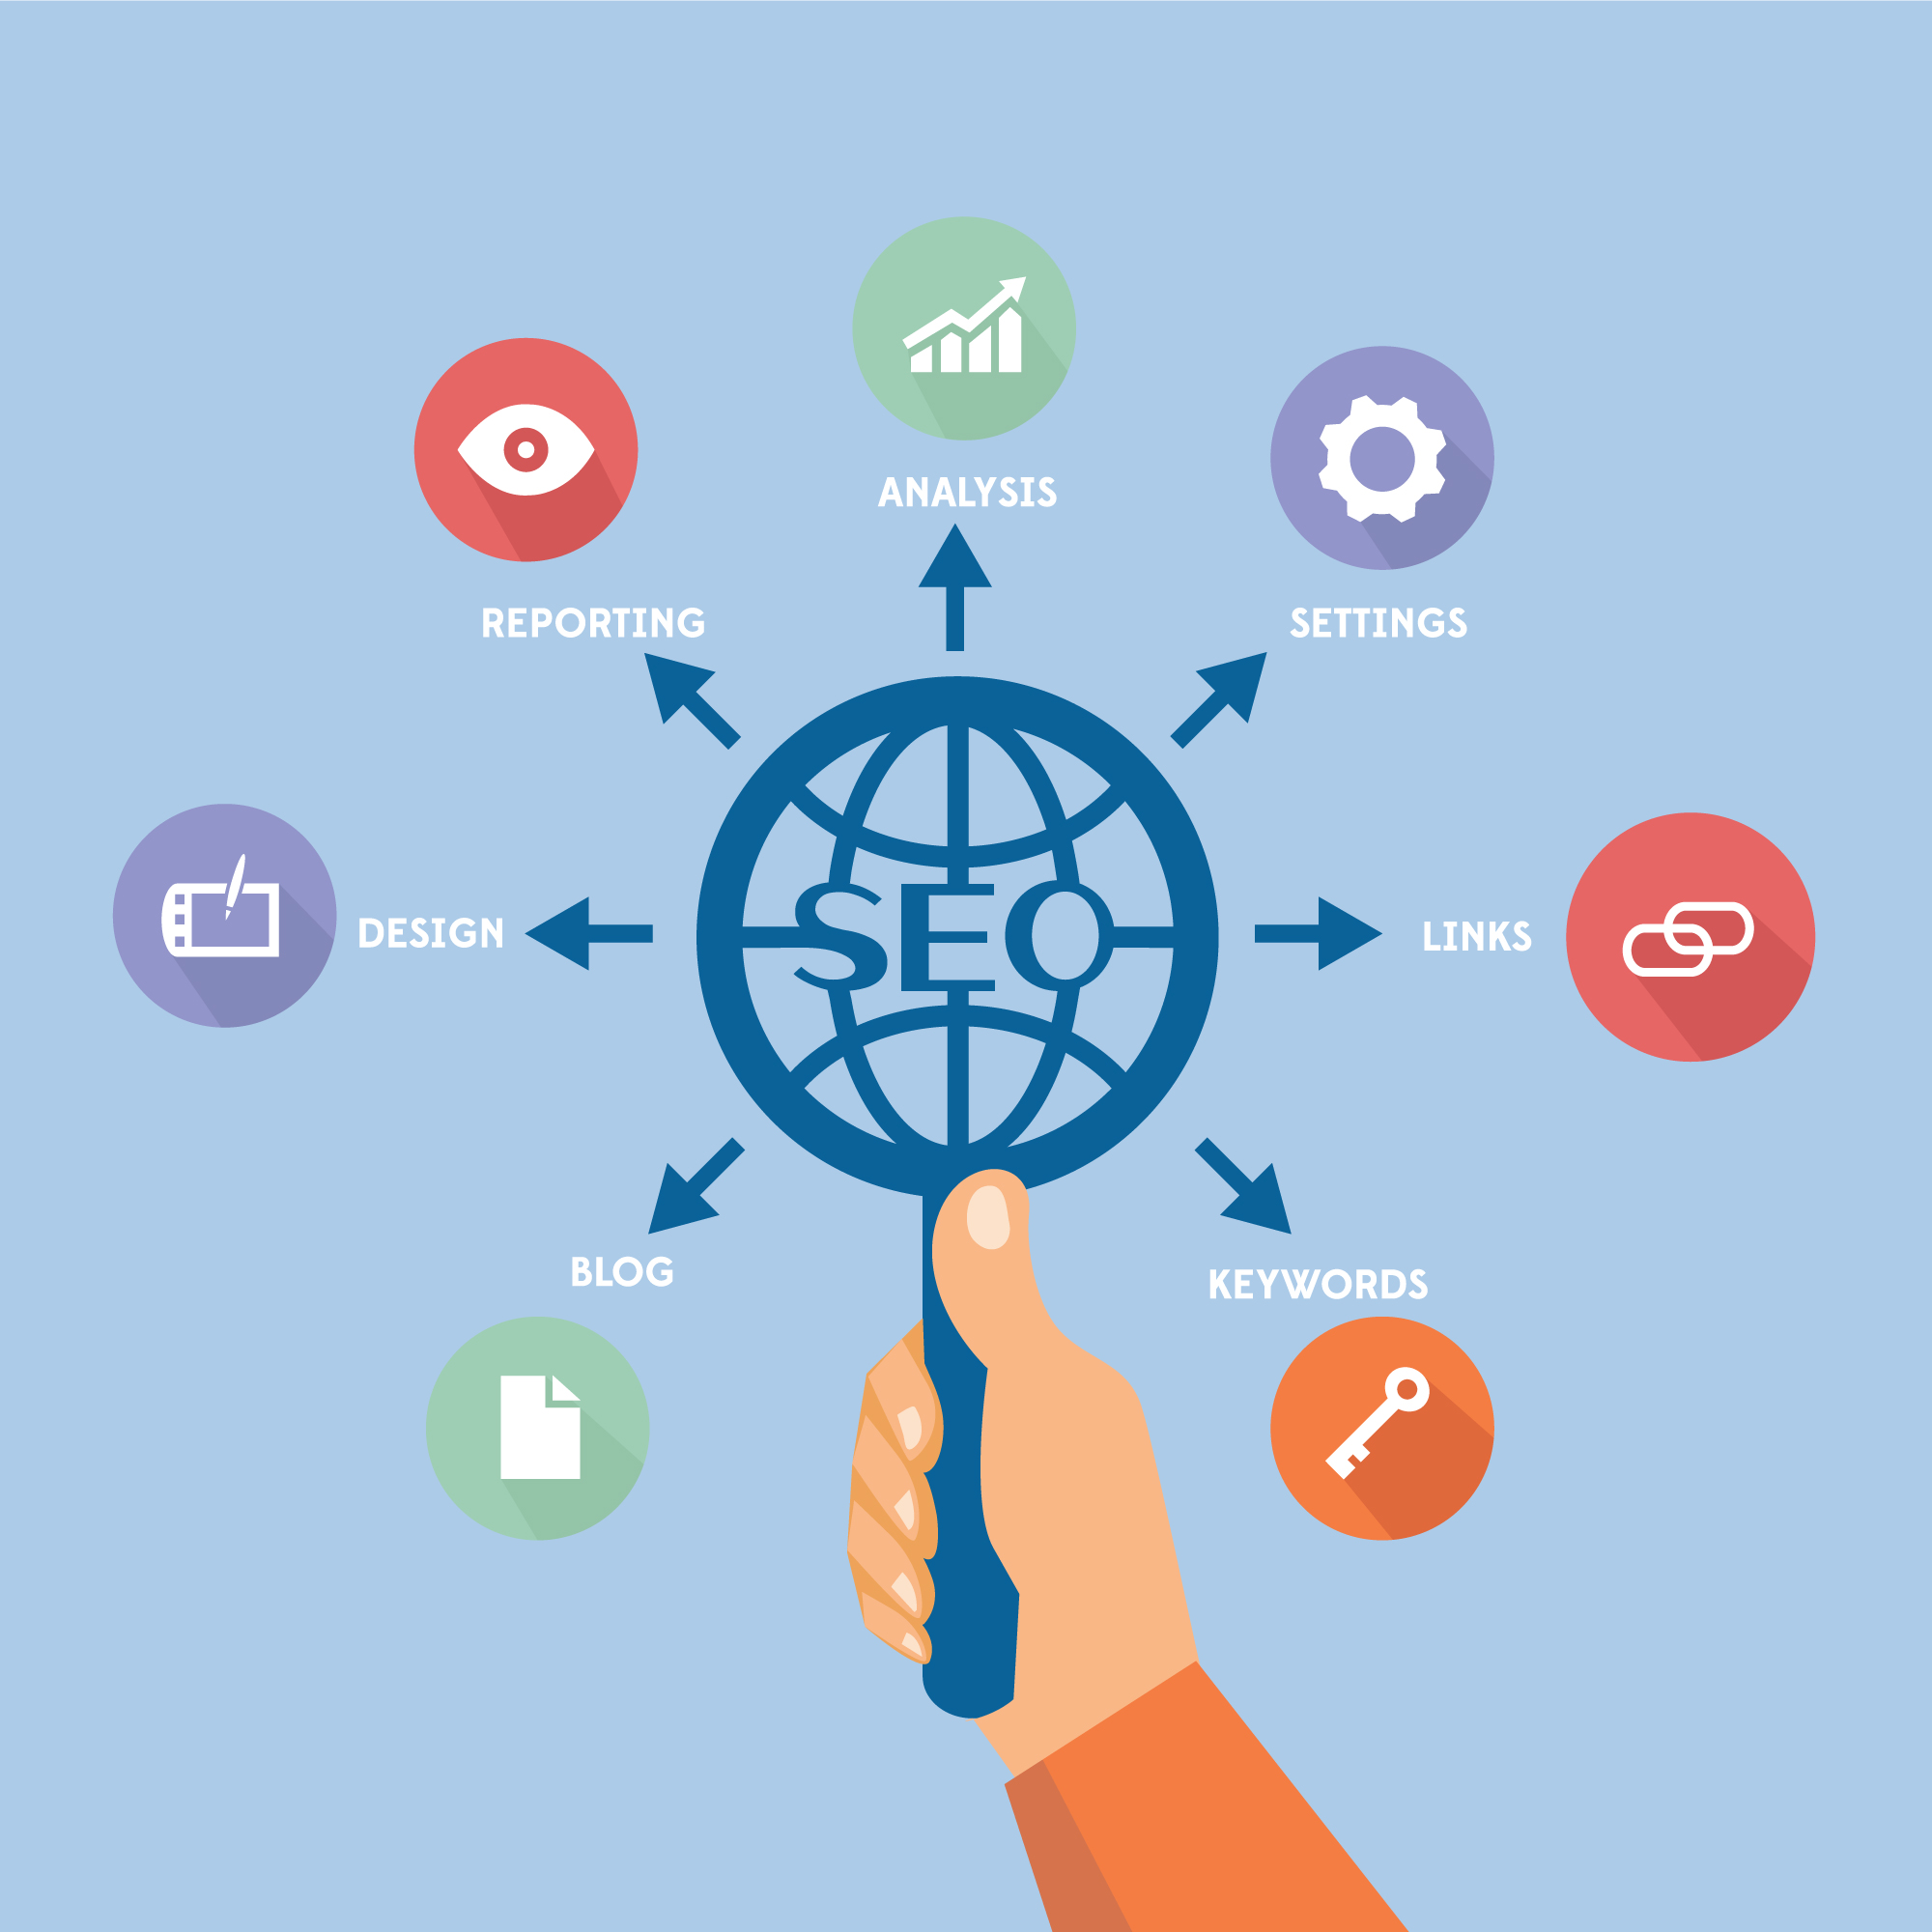 Increase website traffic and brand awareness through SEO